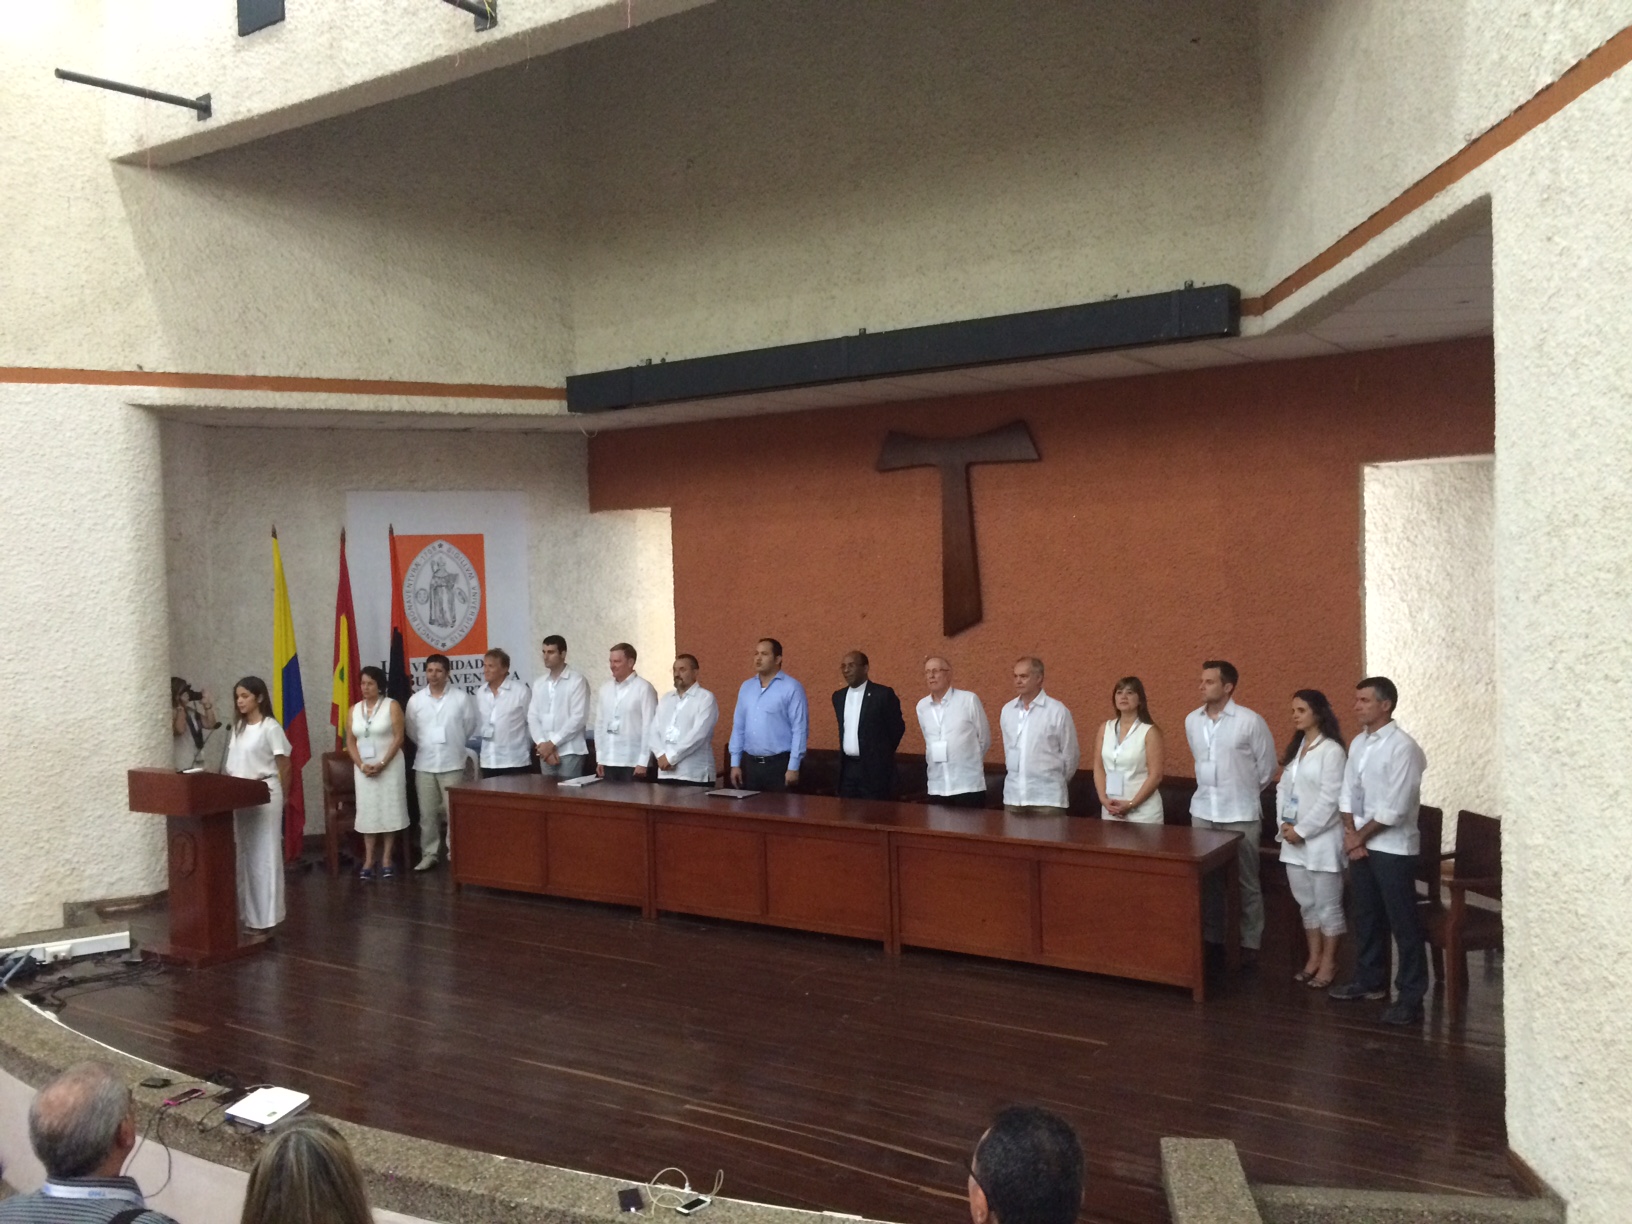 II CONGRESO IBEROAMERICANO DE TERAPIA MANUAL ORTOPEDICA, CARTAGENA, COLOMBIA